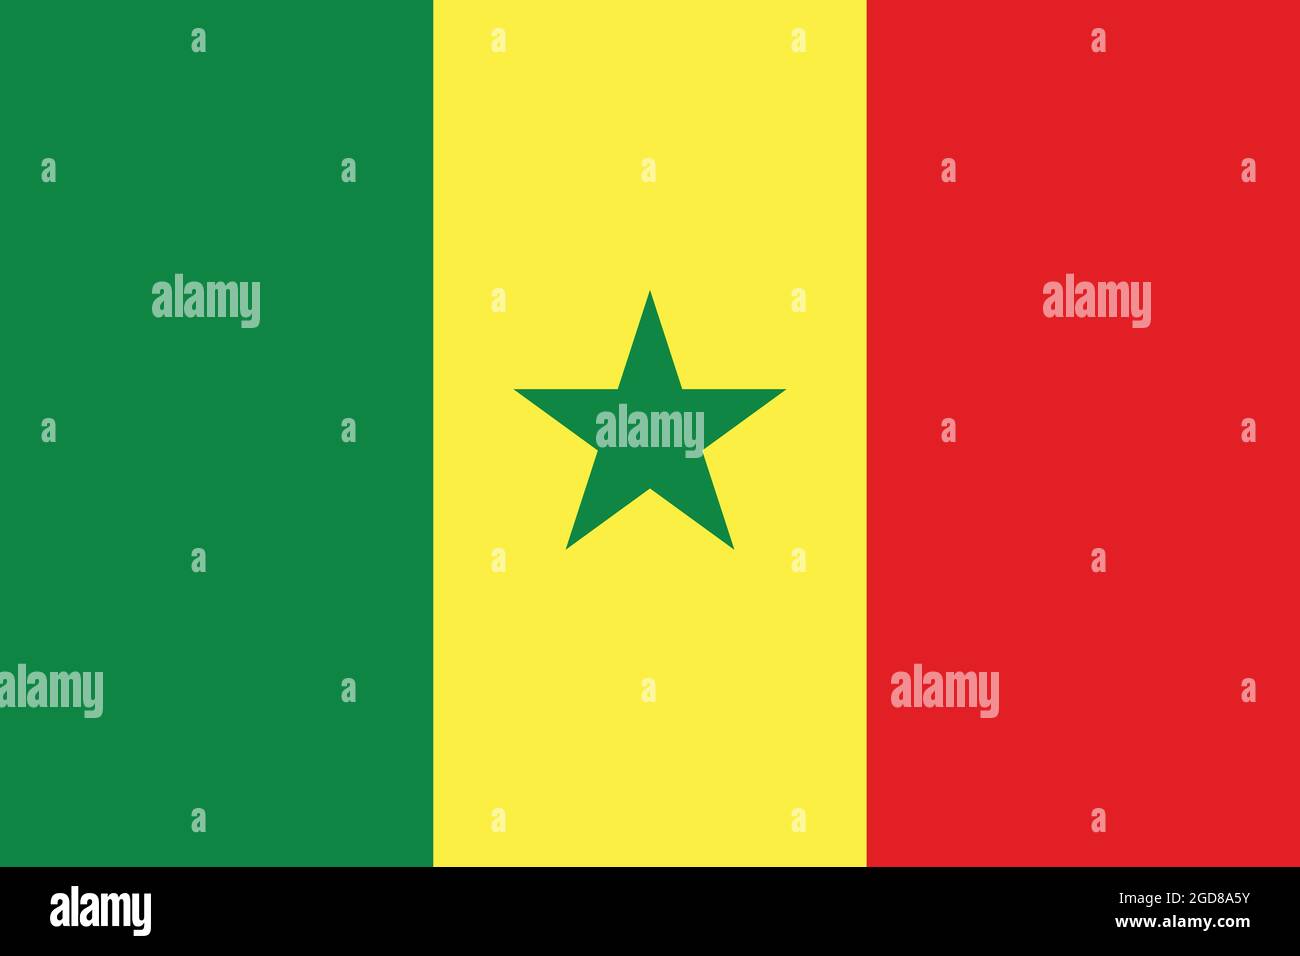 Nationalflagge Senegals Originalgröße und Farben Vektorgrafik, drapeau du Senegal tricolor, Flagge der Republik Senegal Flagge Stock Vektor